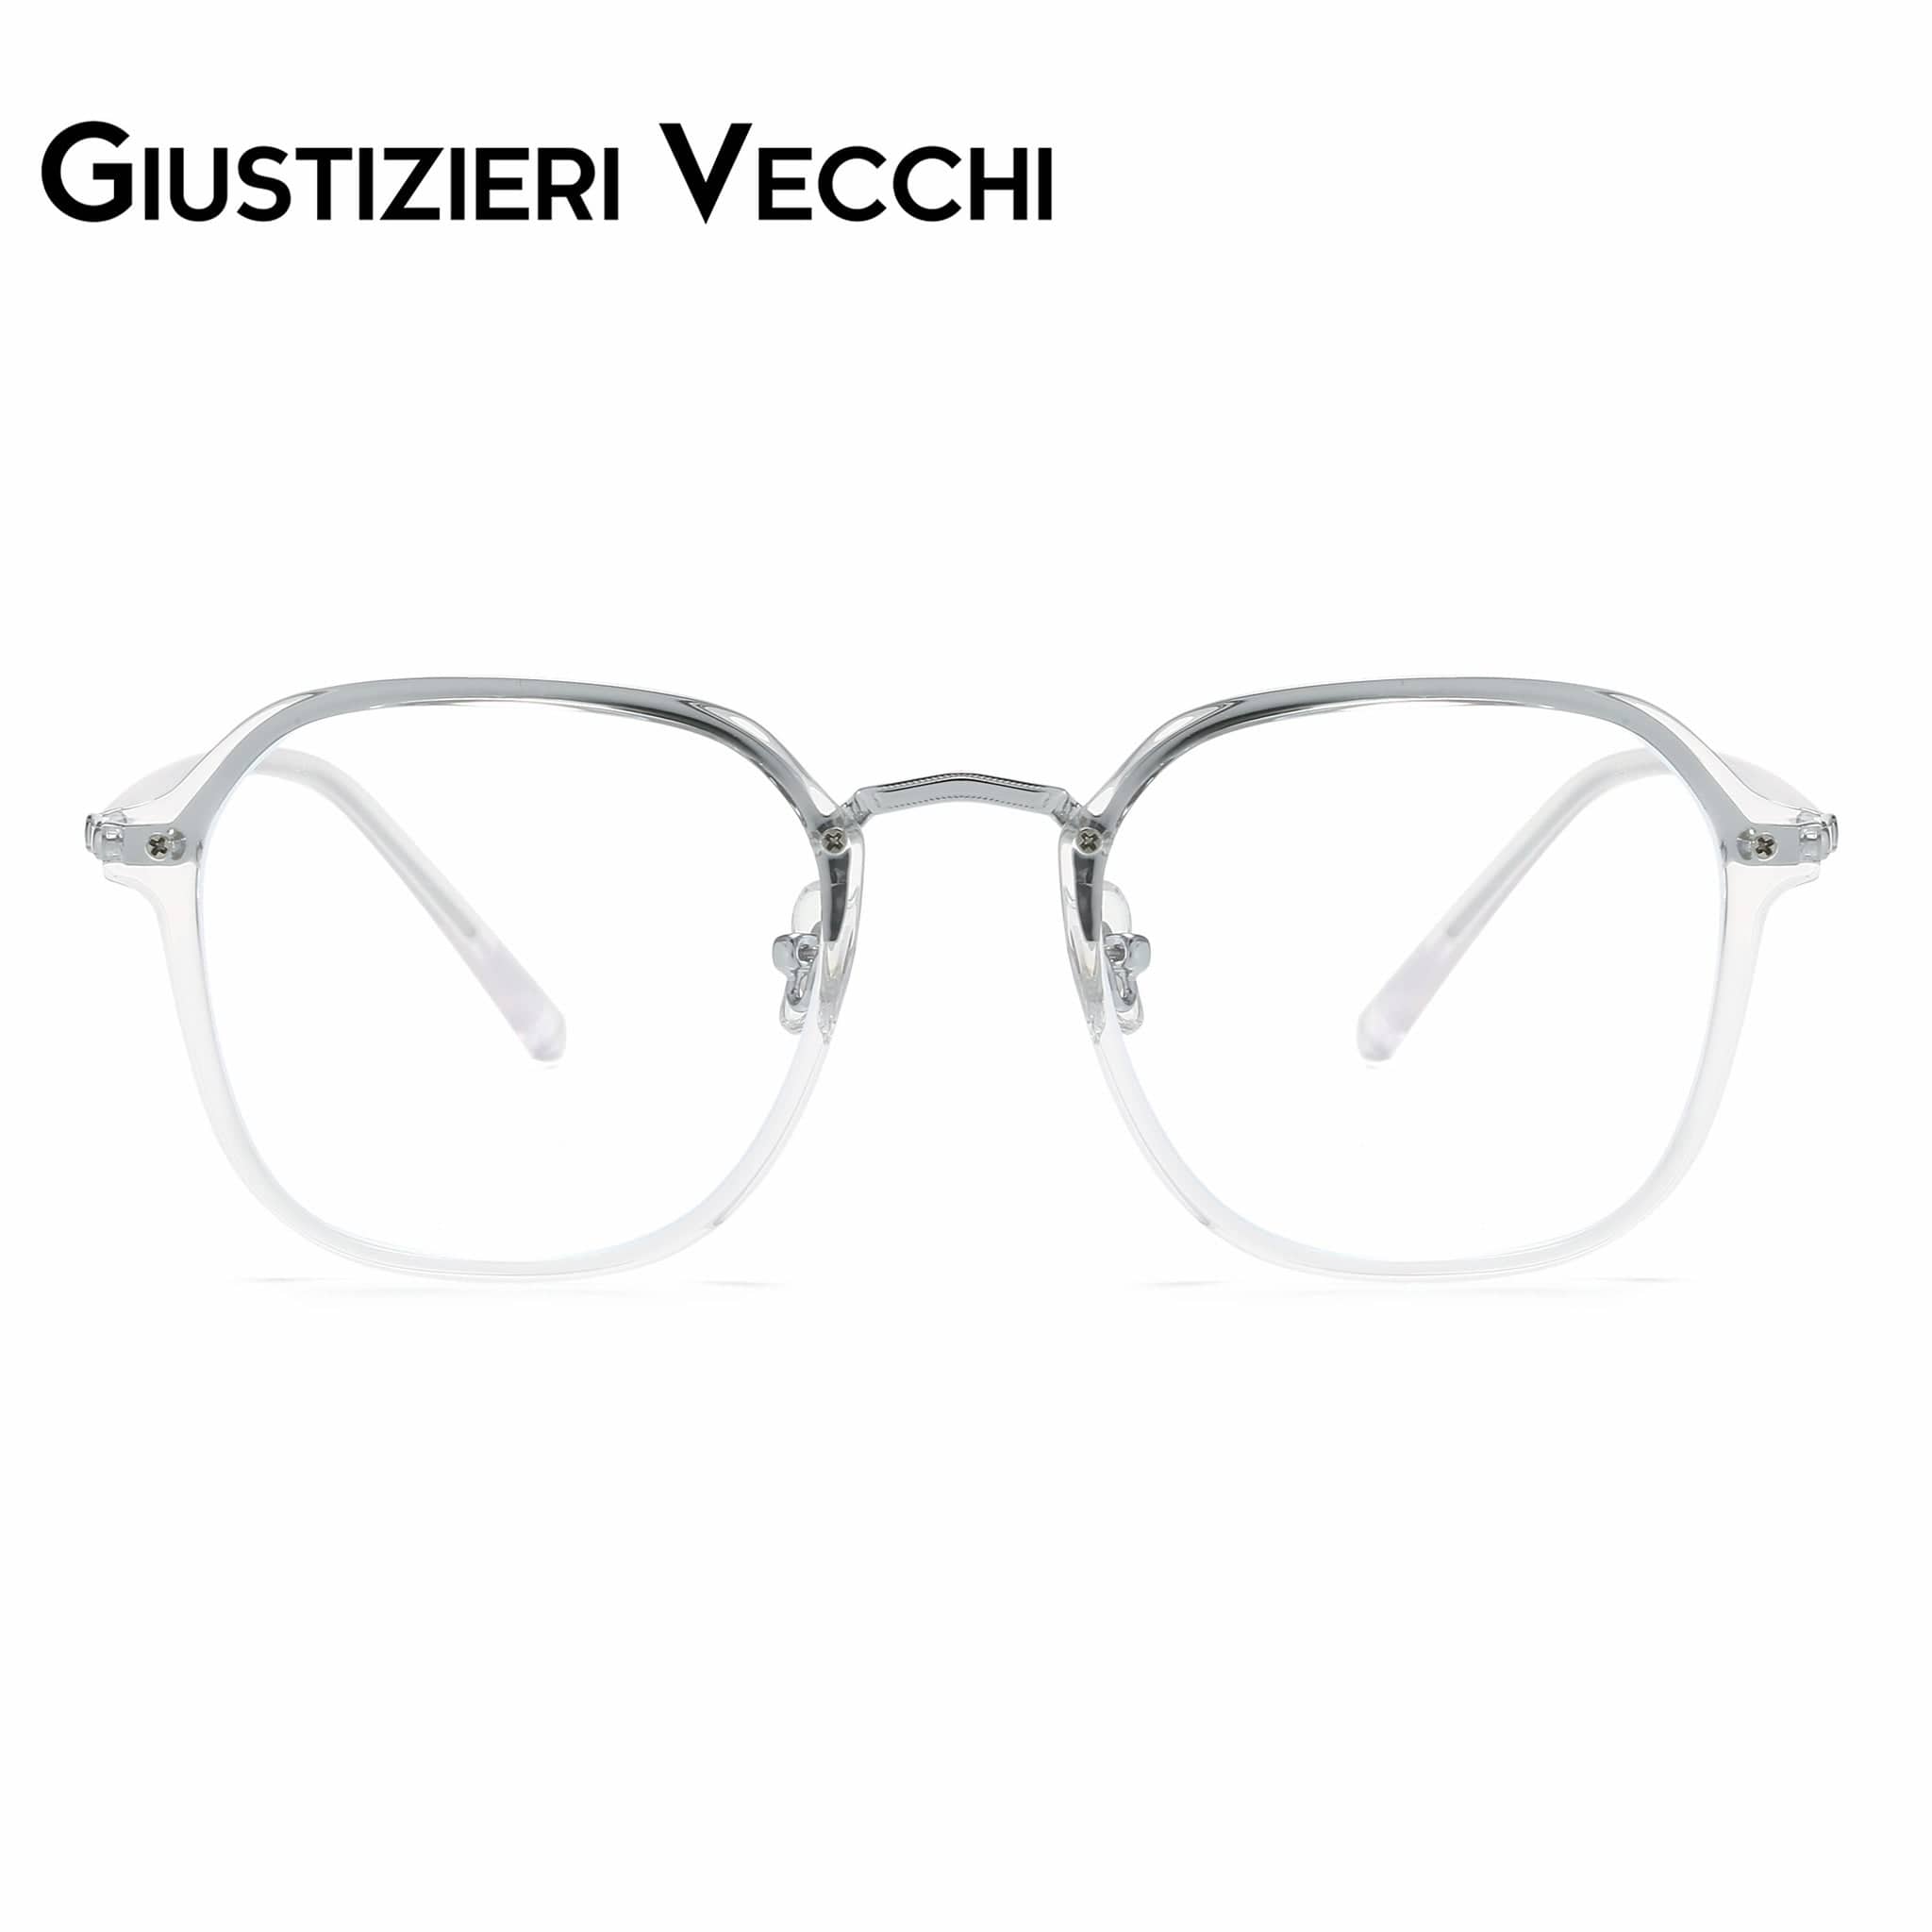 GIUSTIZIERI VECCHI Eyeglasses Small / Clear Crystal ModaChic Duo